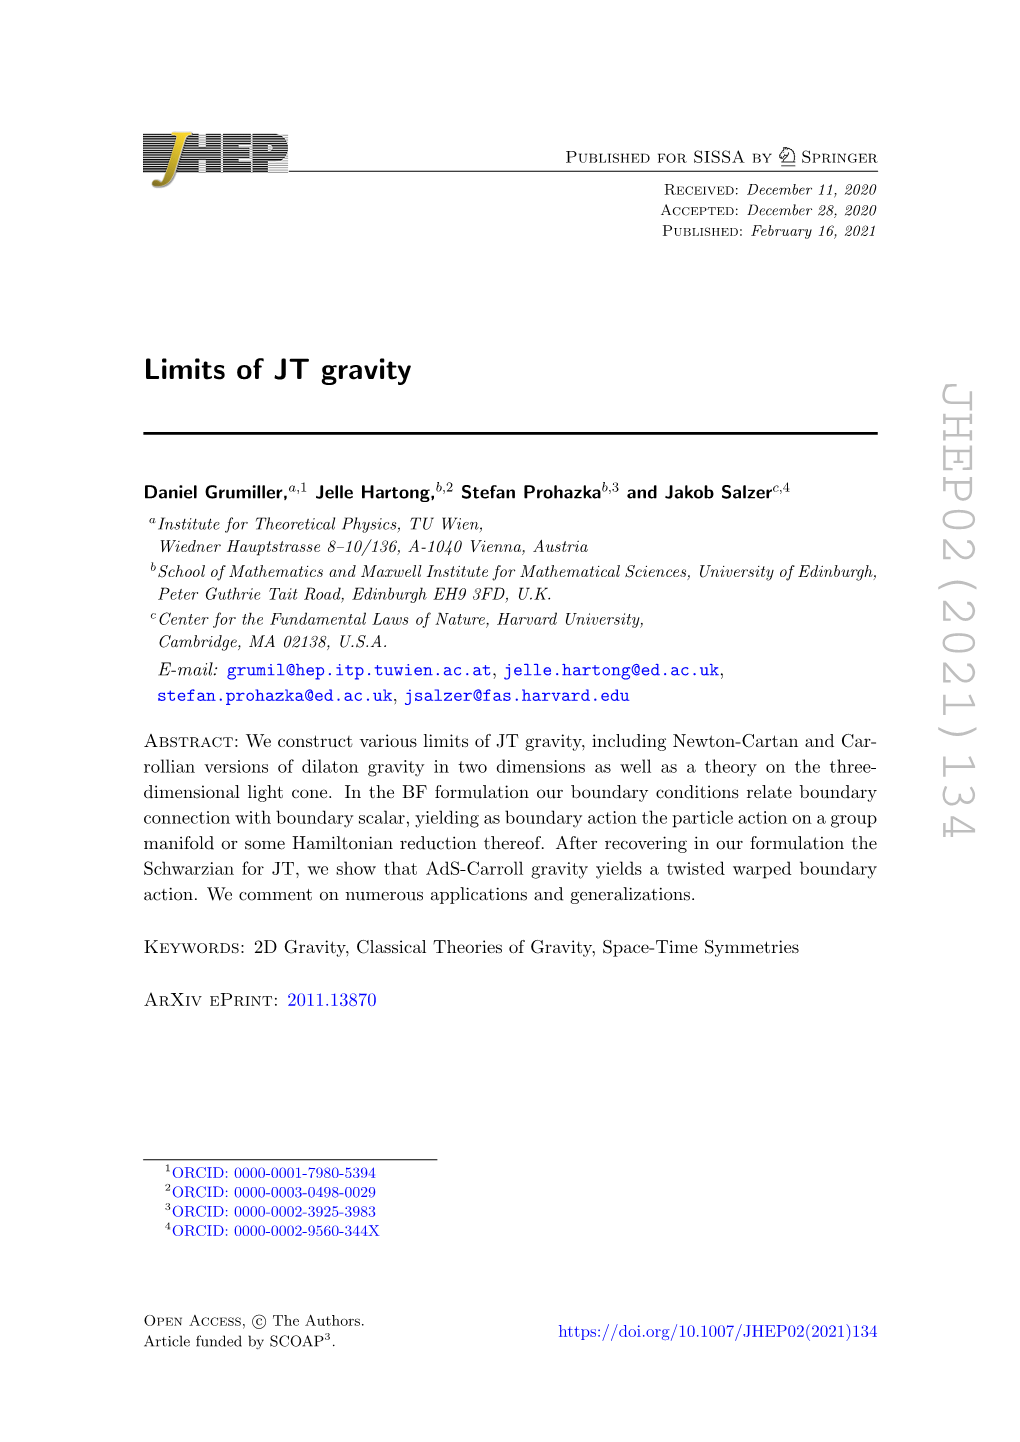 Limits of JT Gravity